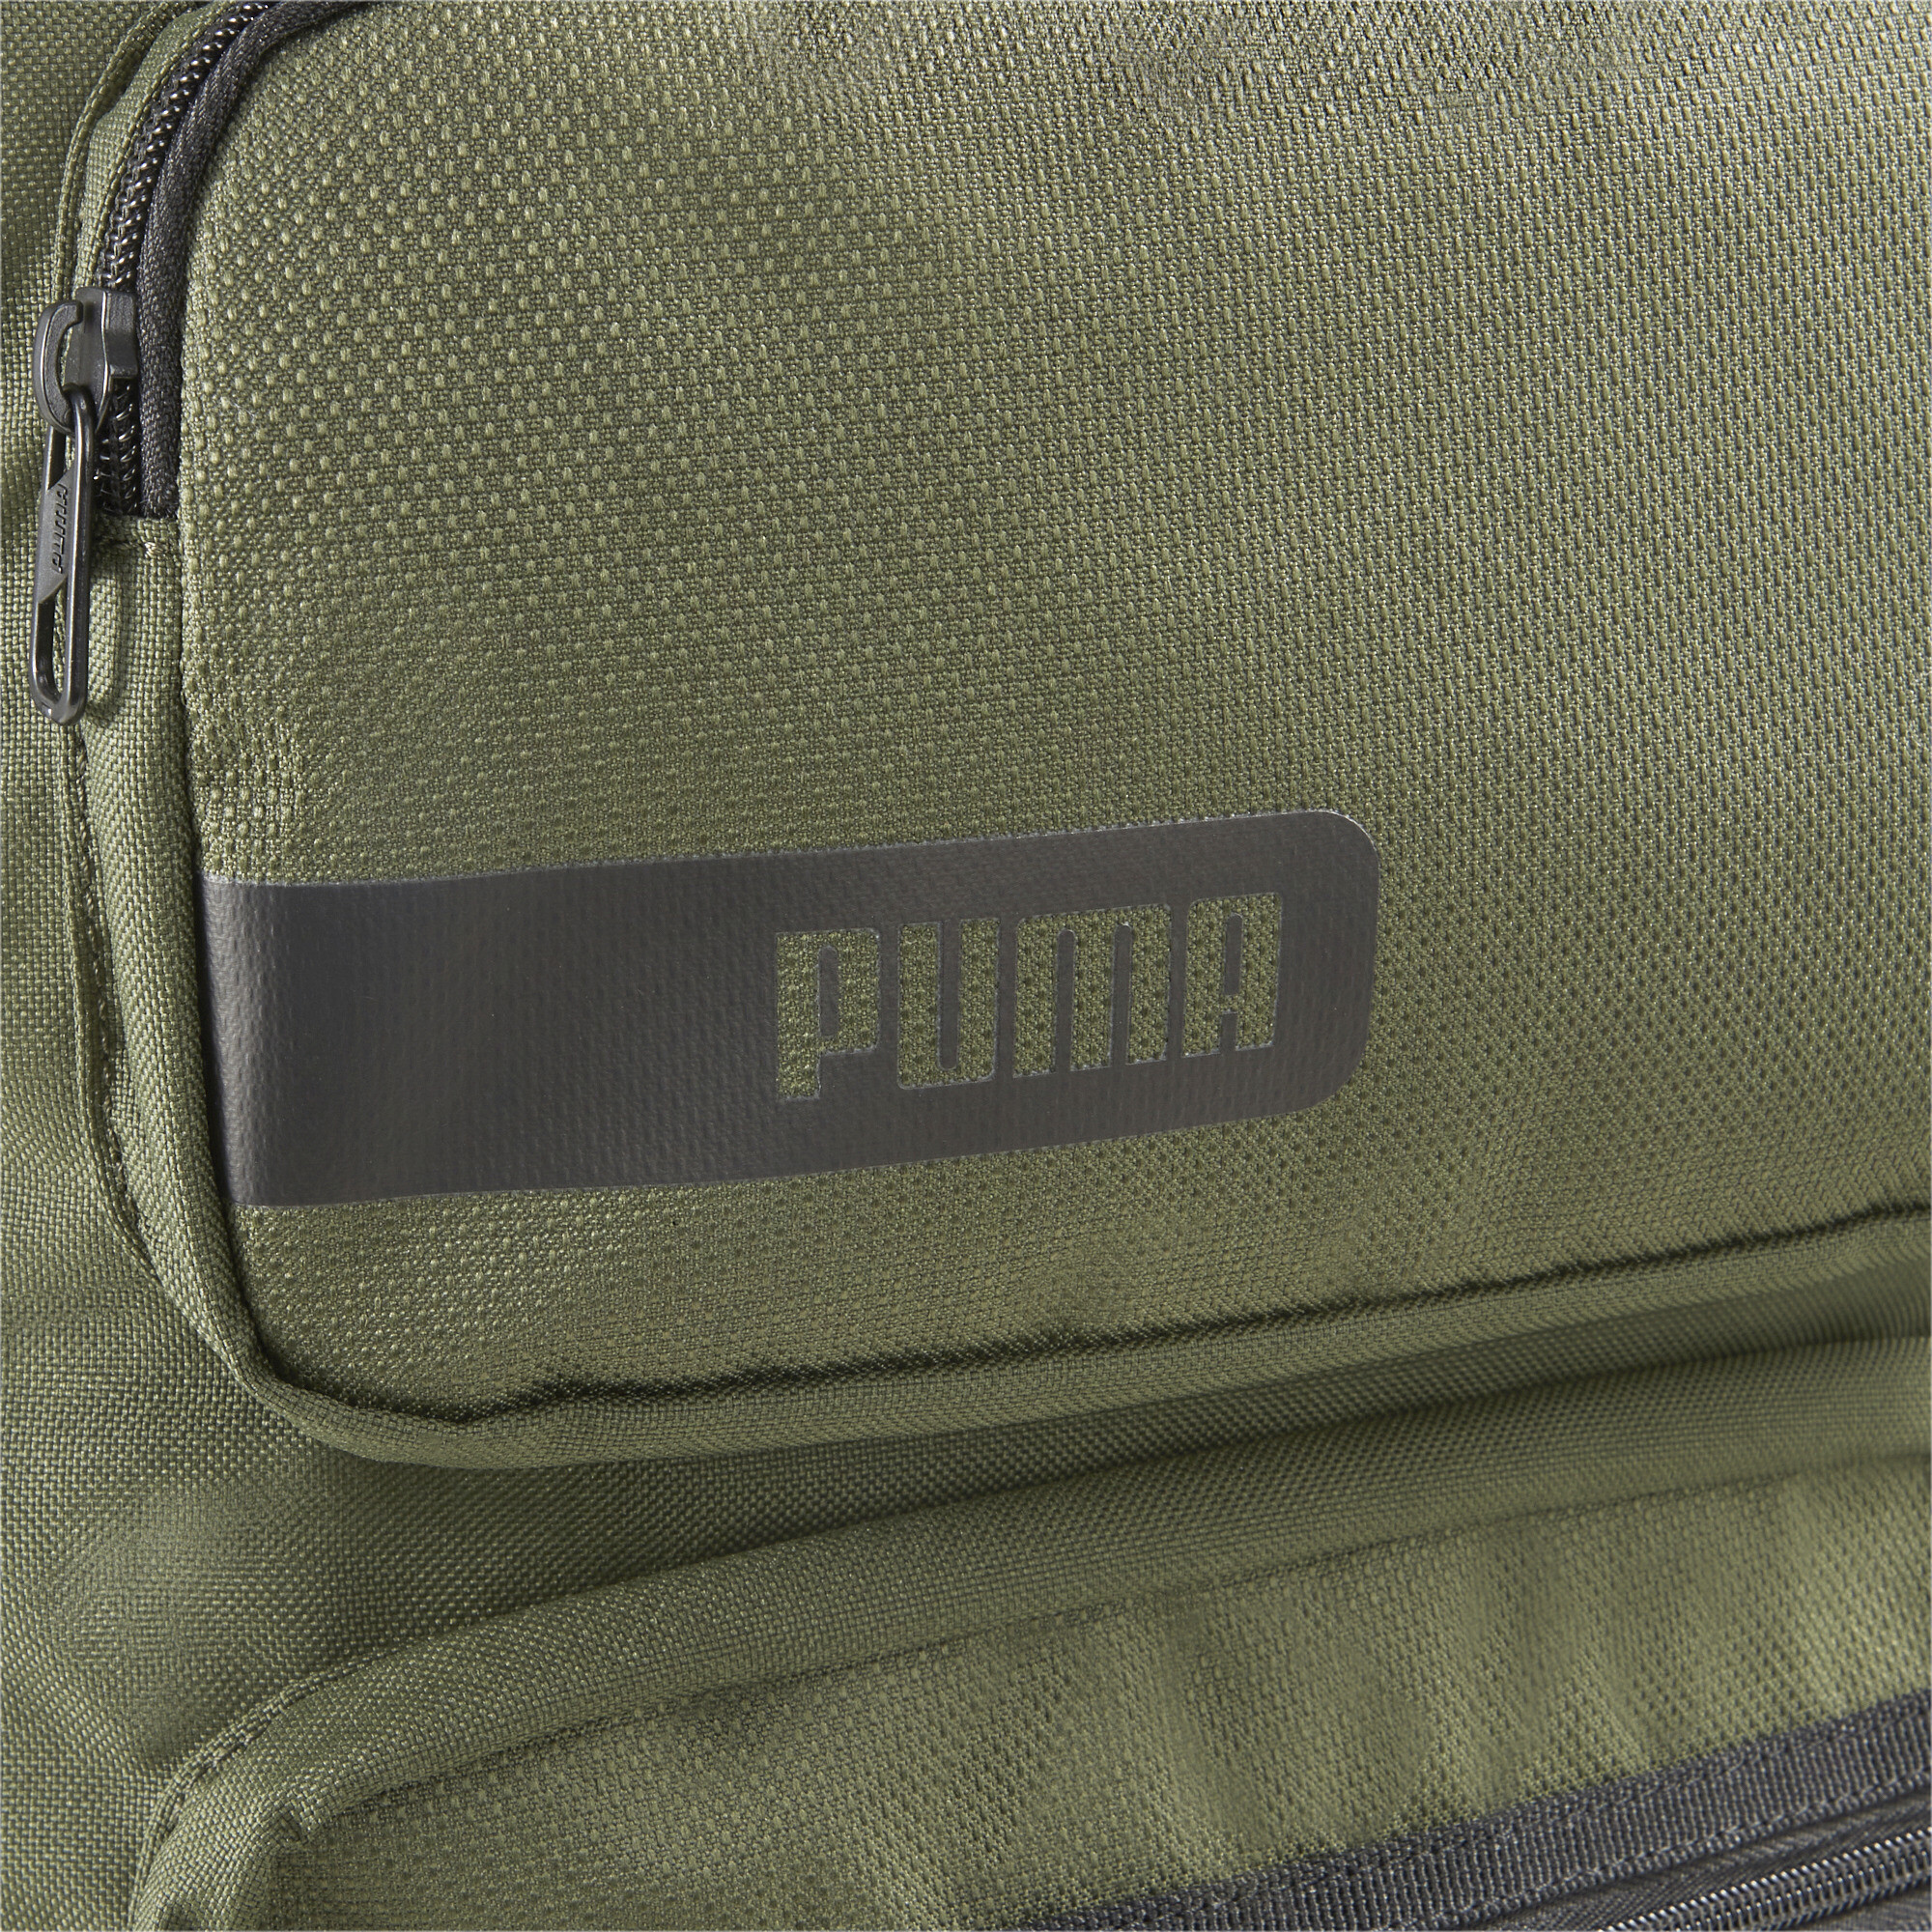 Puma Deck Backpack, Green, Accessories